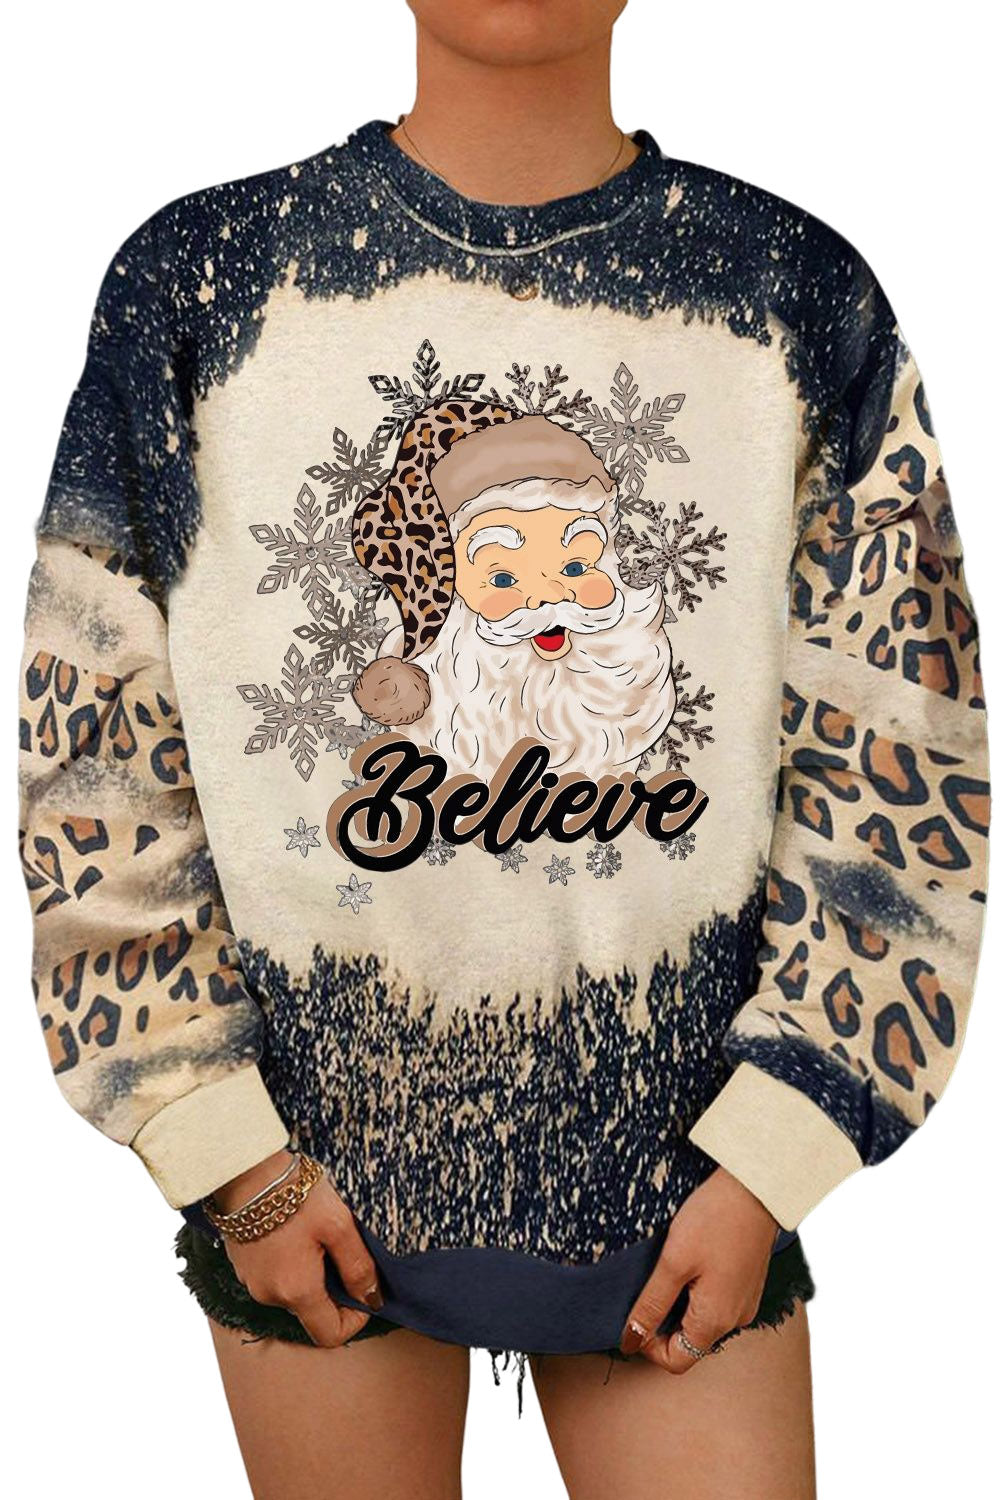 Black Believe Santa Claus Casual Christmas Graphic Sweatshirt